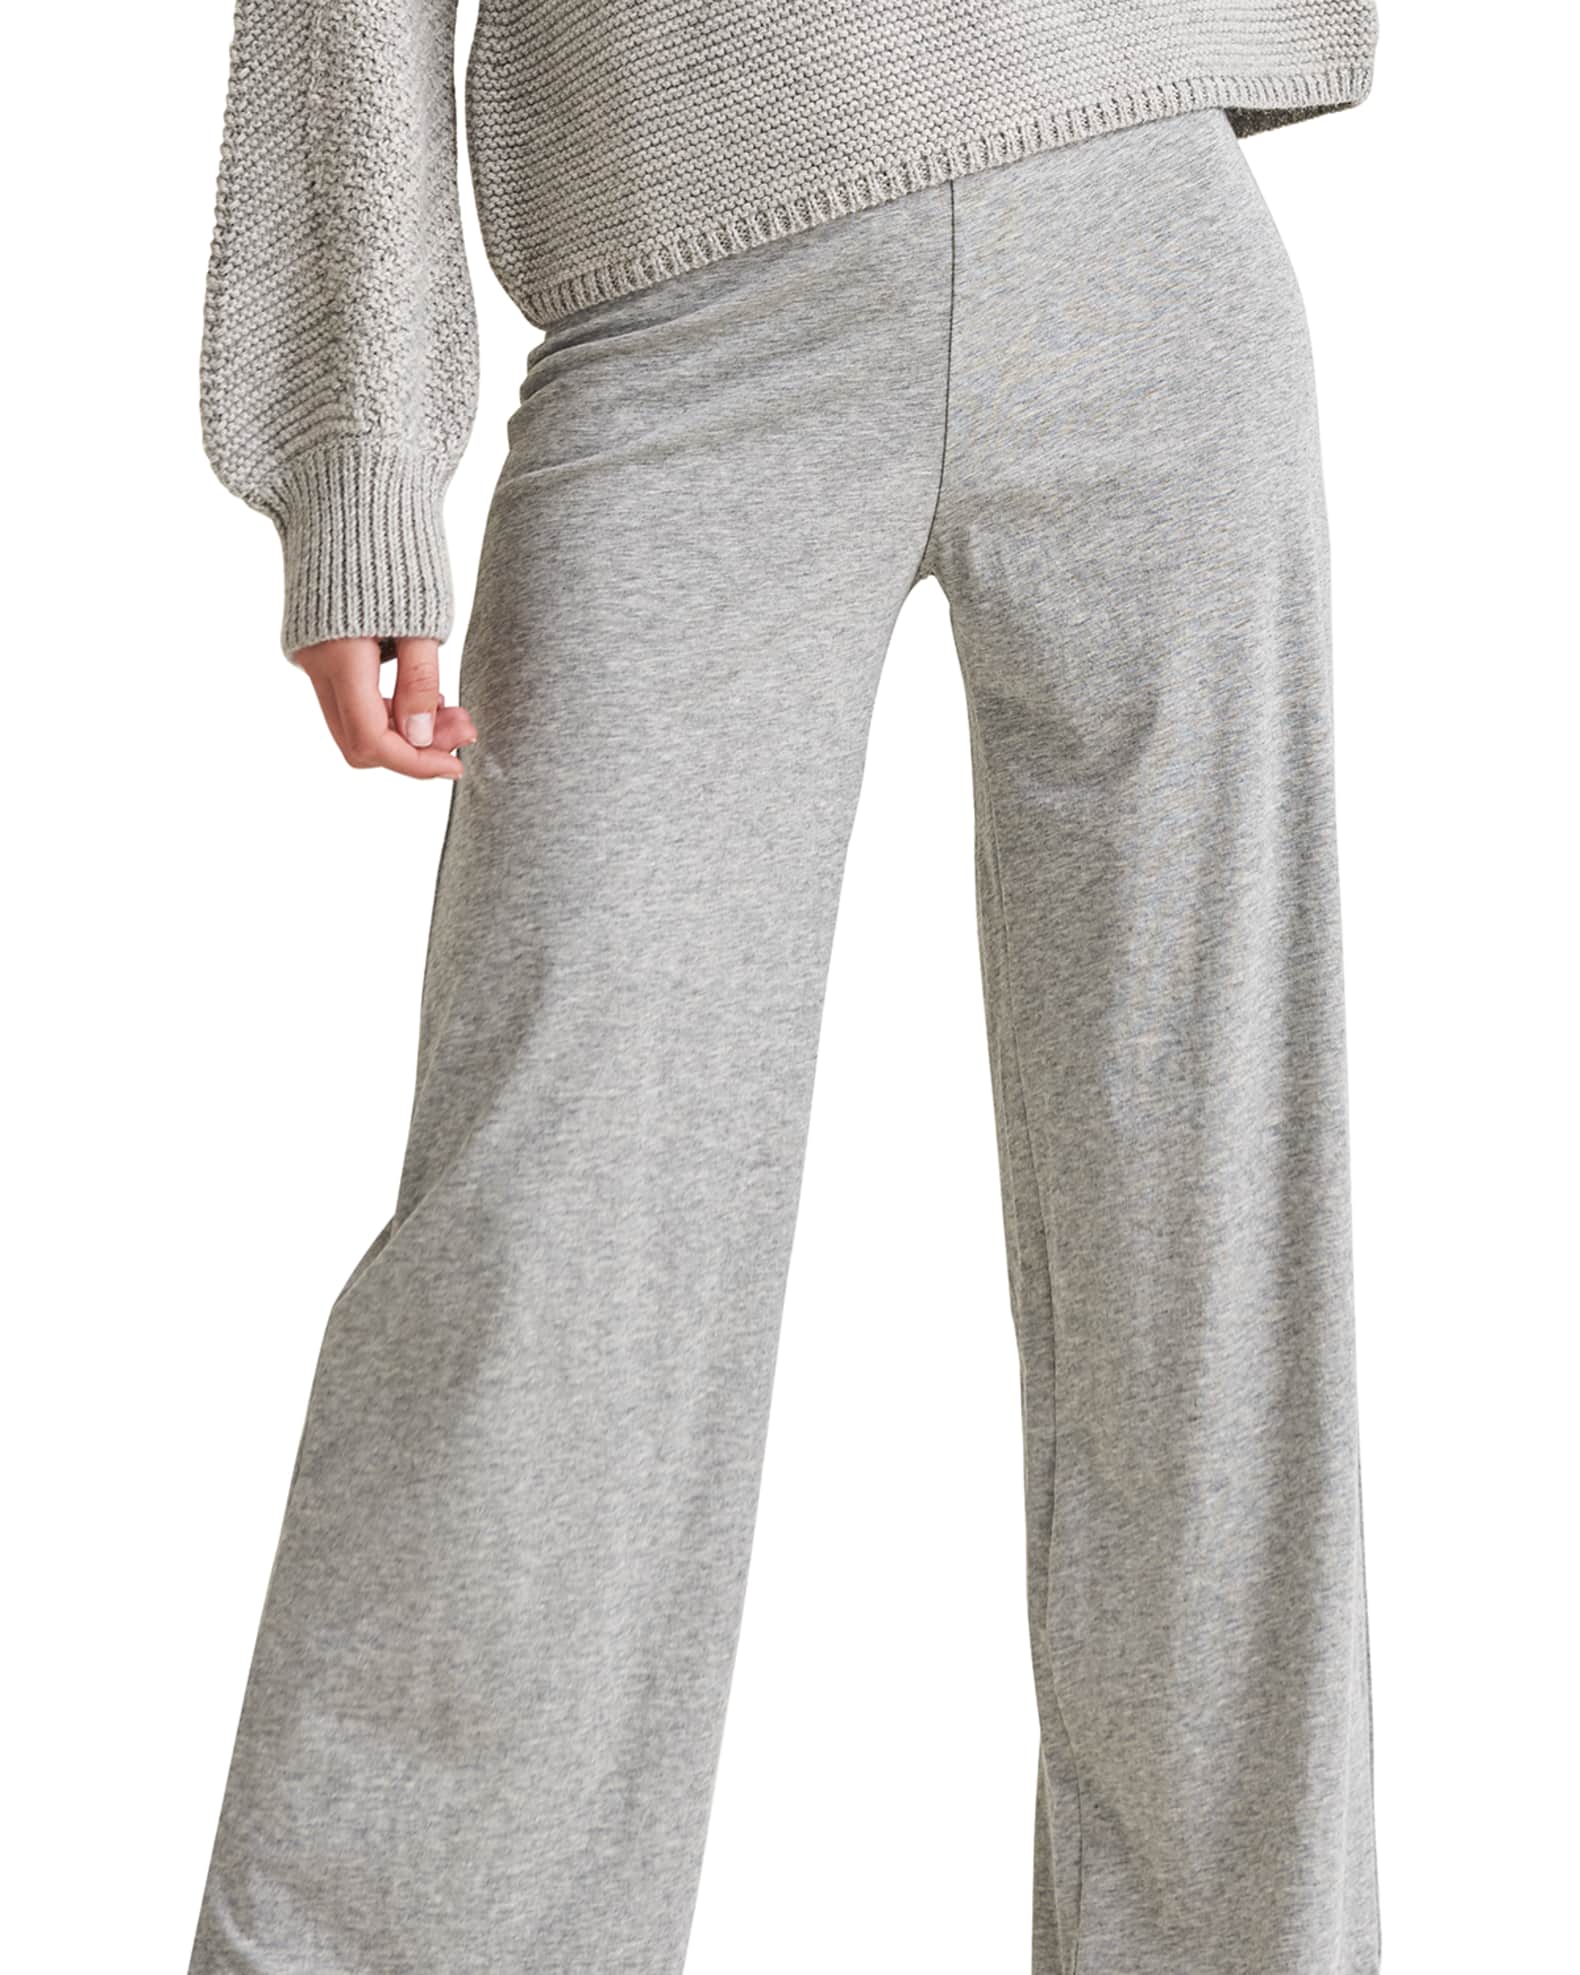 Super Soft Plush Drawstring Wide Leg Lounge Pant  Drawstring lounge pants,  Plus size sleepwear, Matches fashion